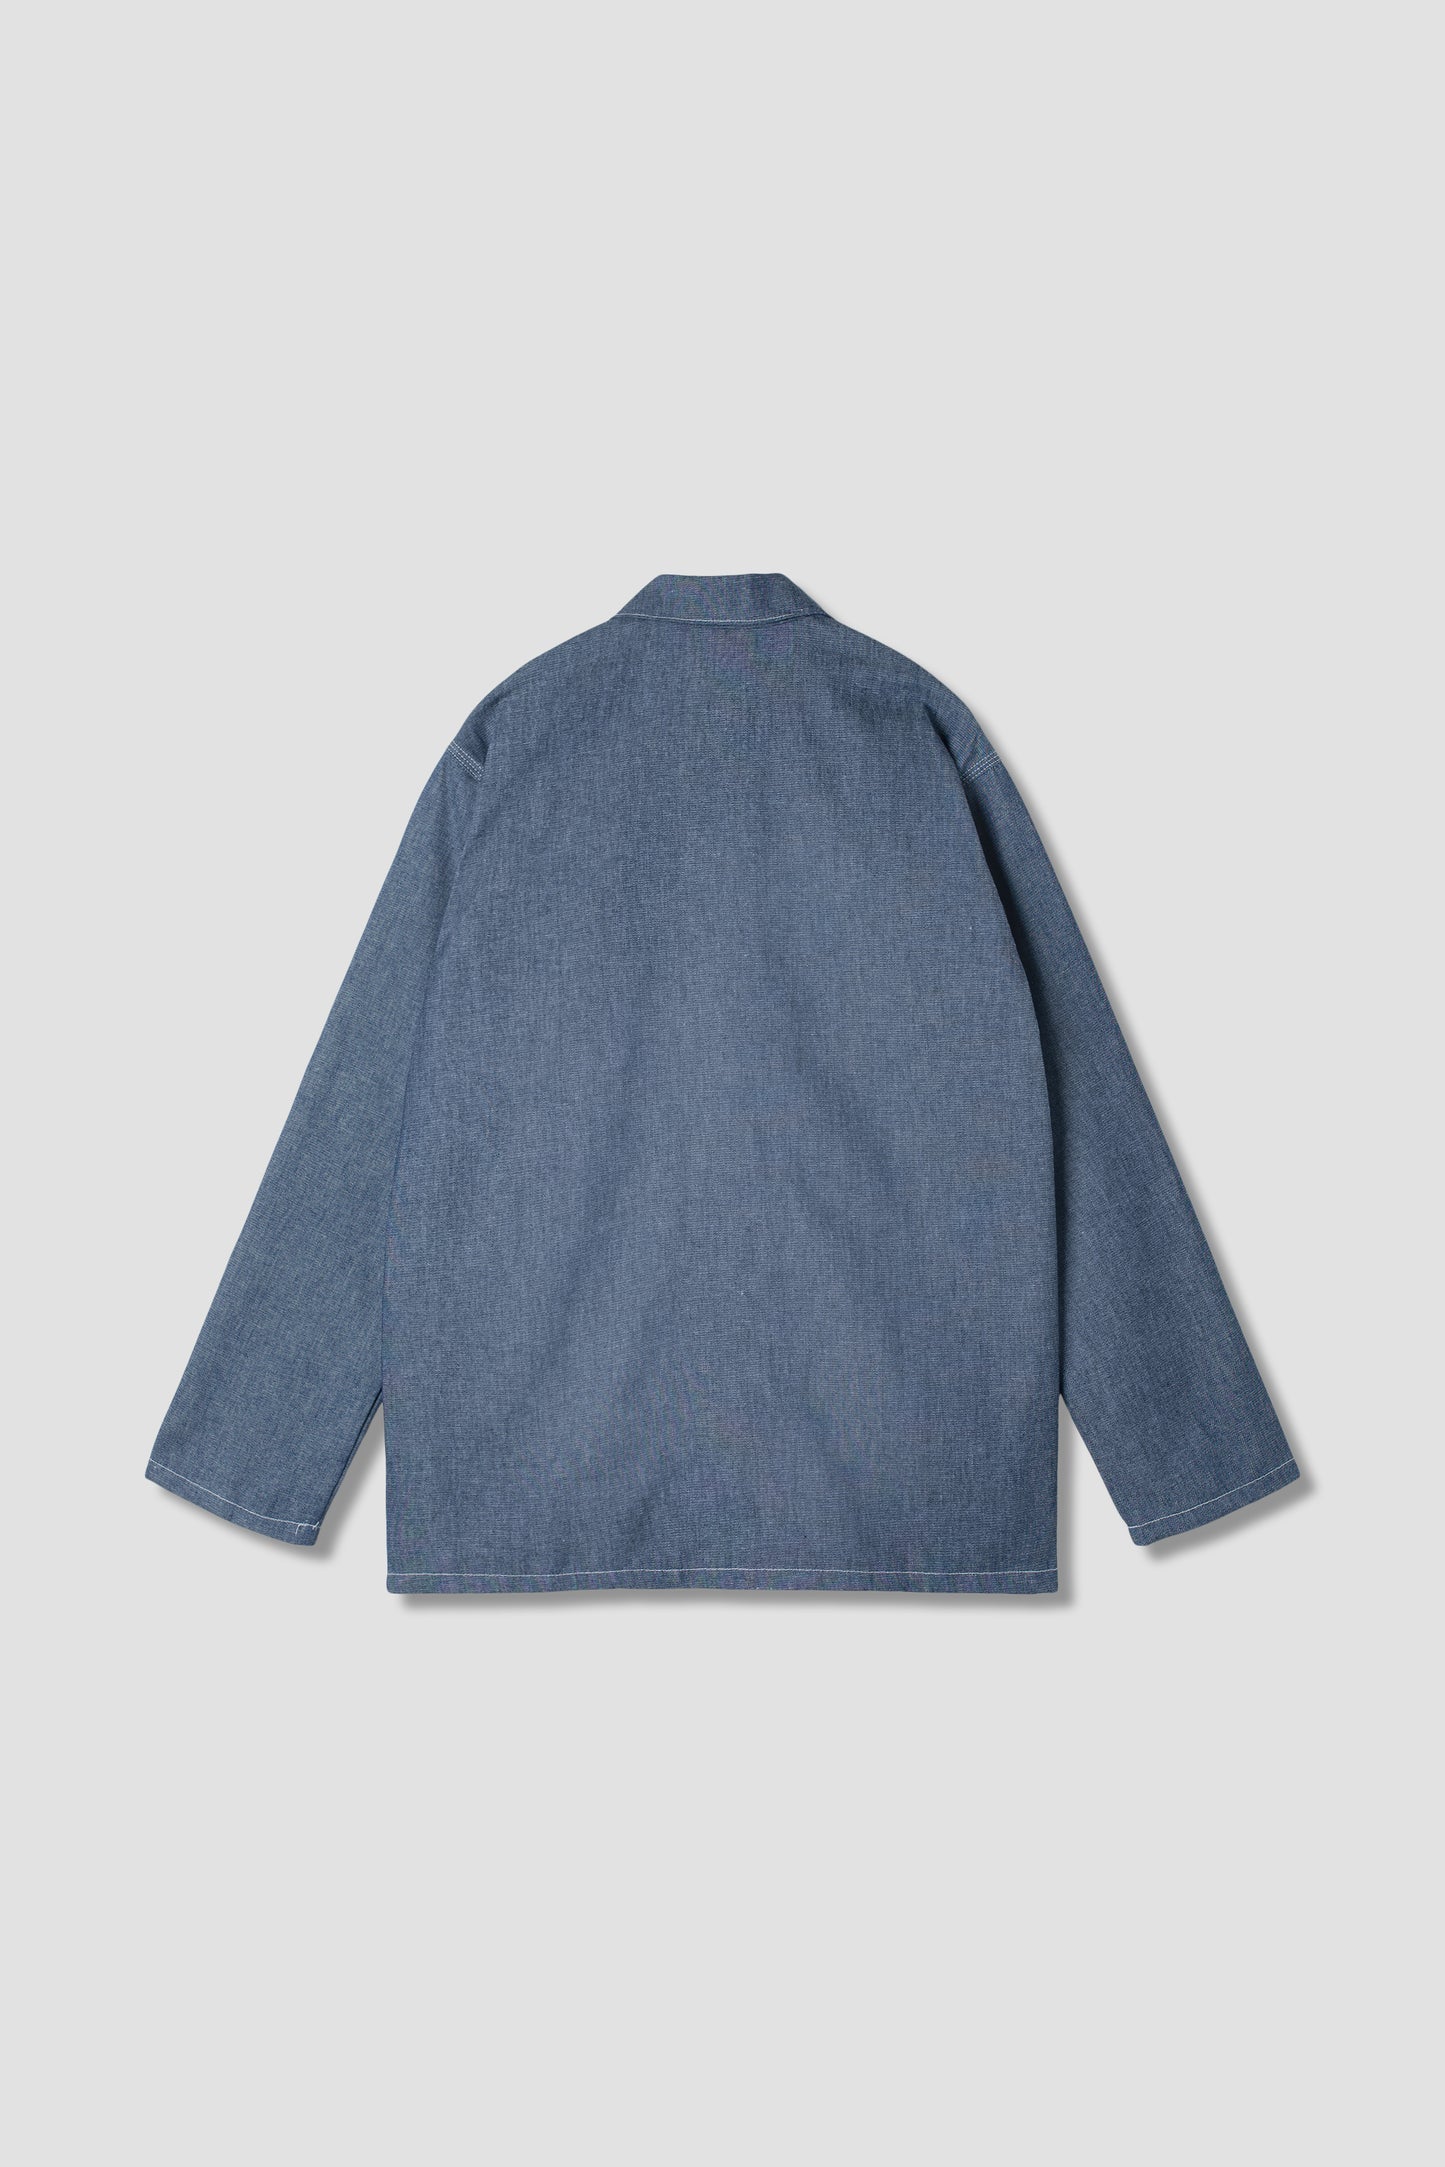 Shop Jacket (Washed Chambray) – Stan Ray